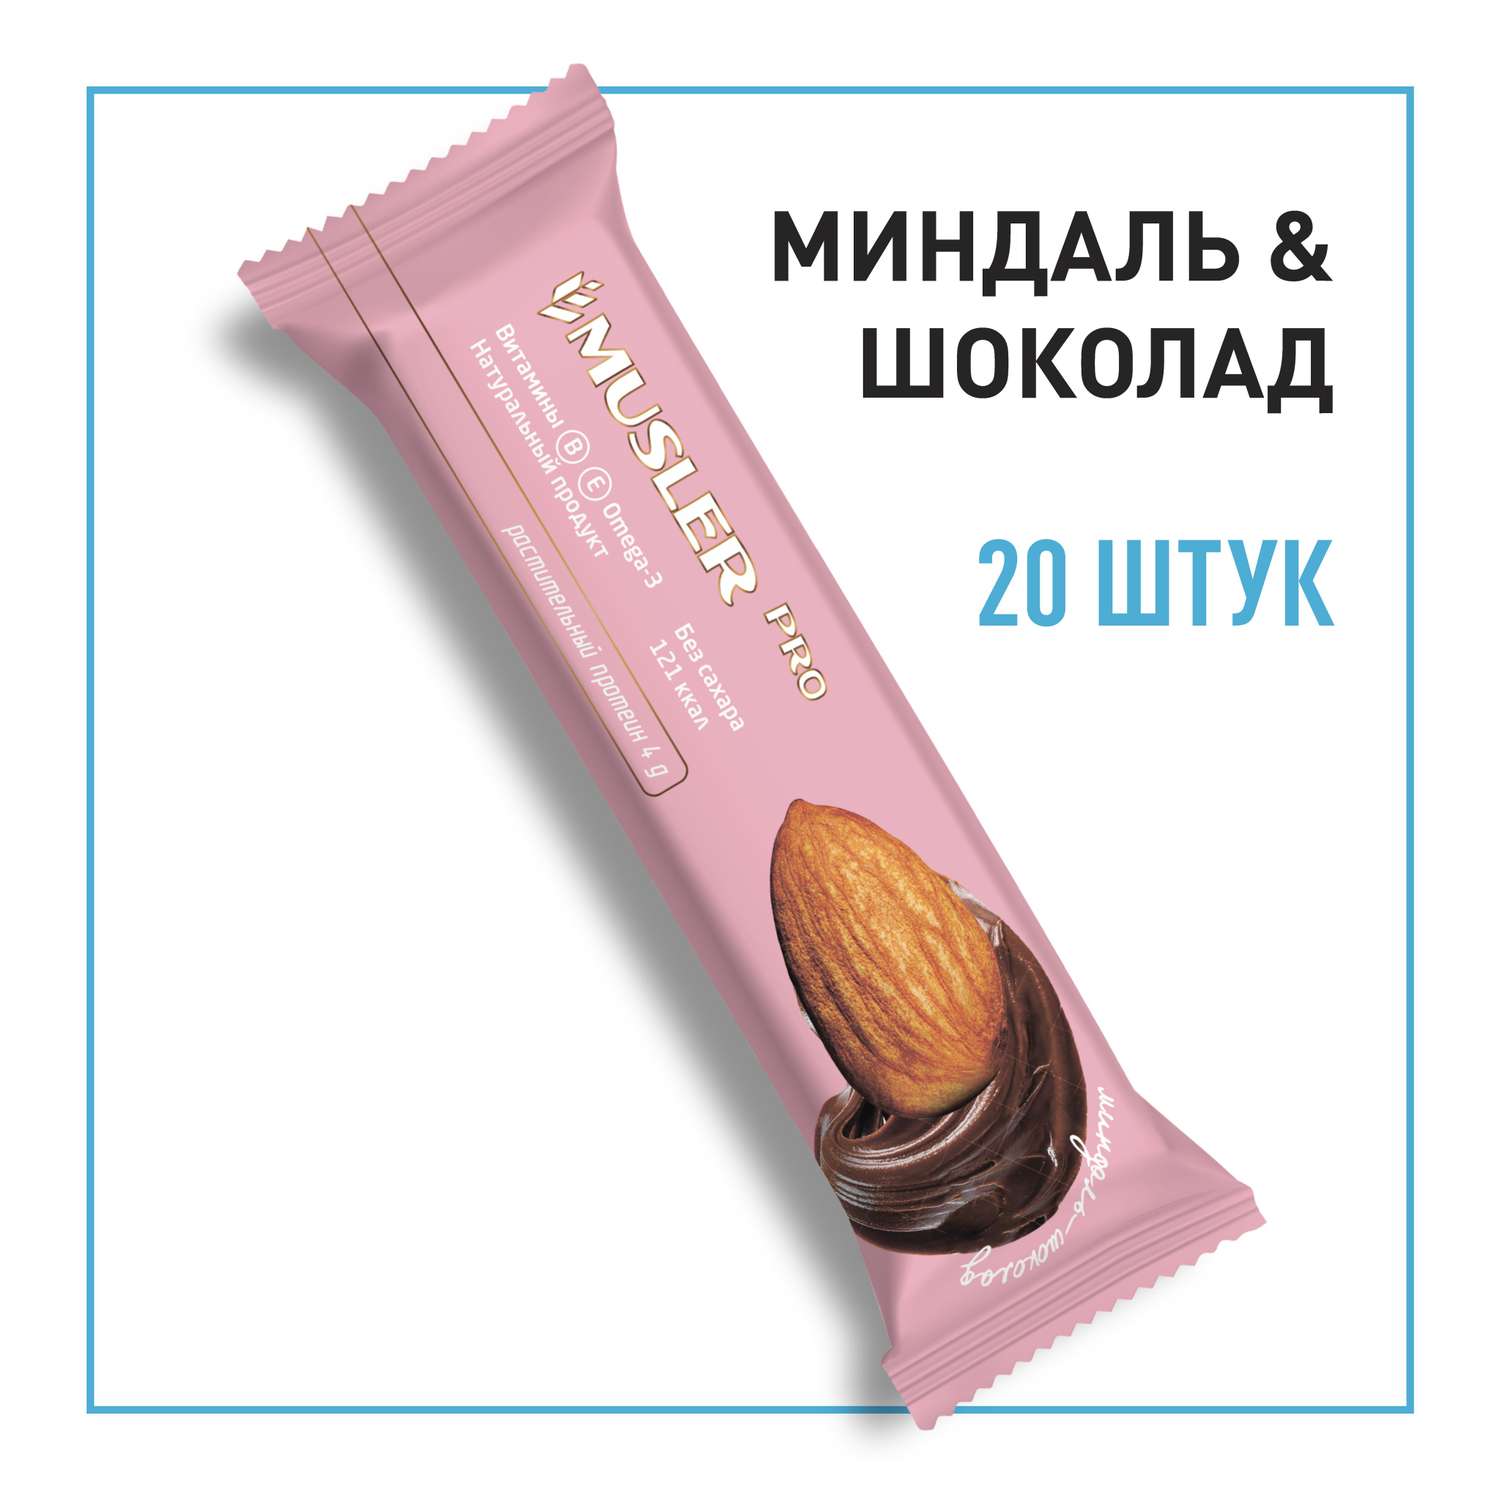 Ореховые батончики MUSLER без сахара Миндаль с шоколадом 20шт х 50г - фото 1